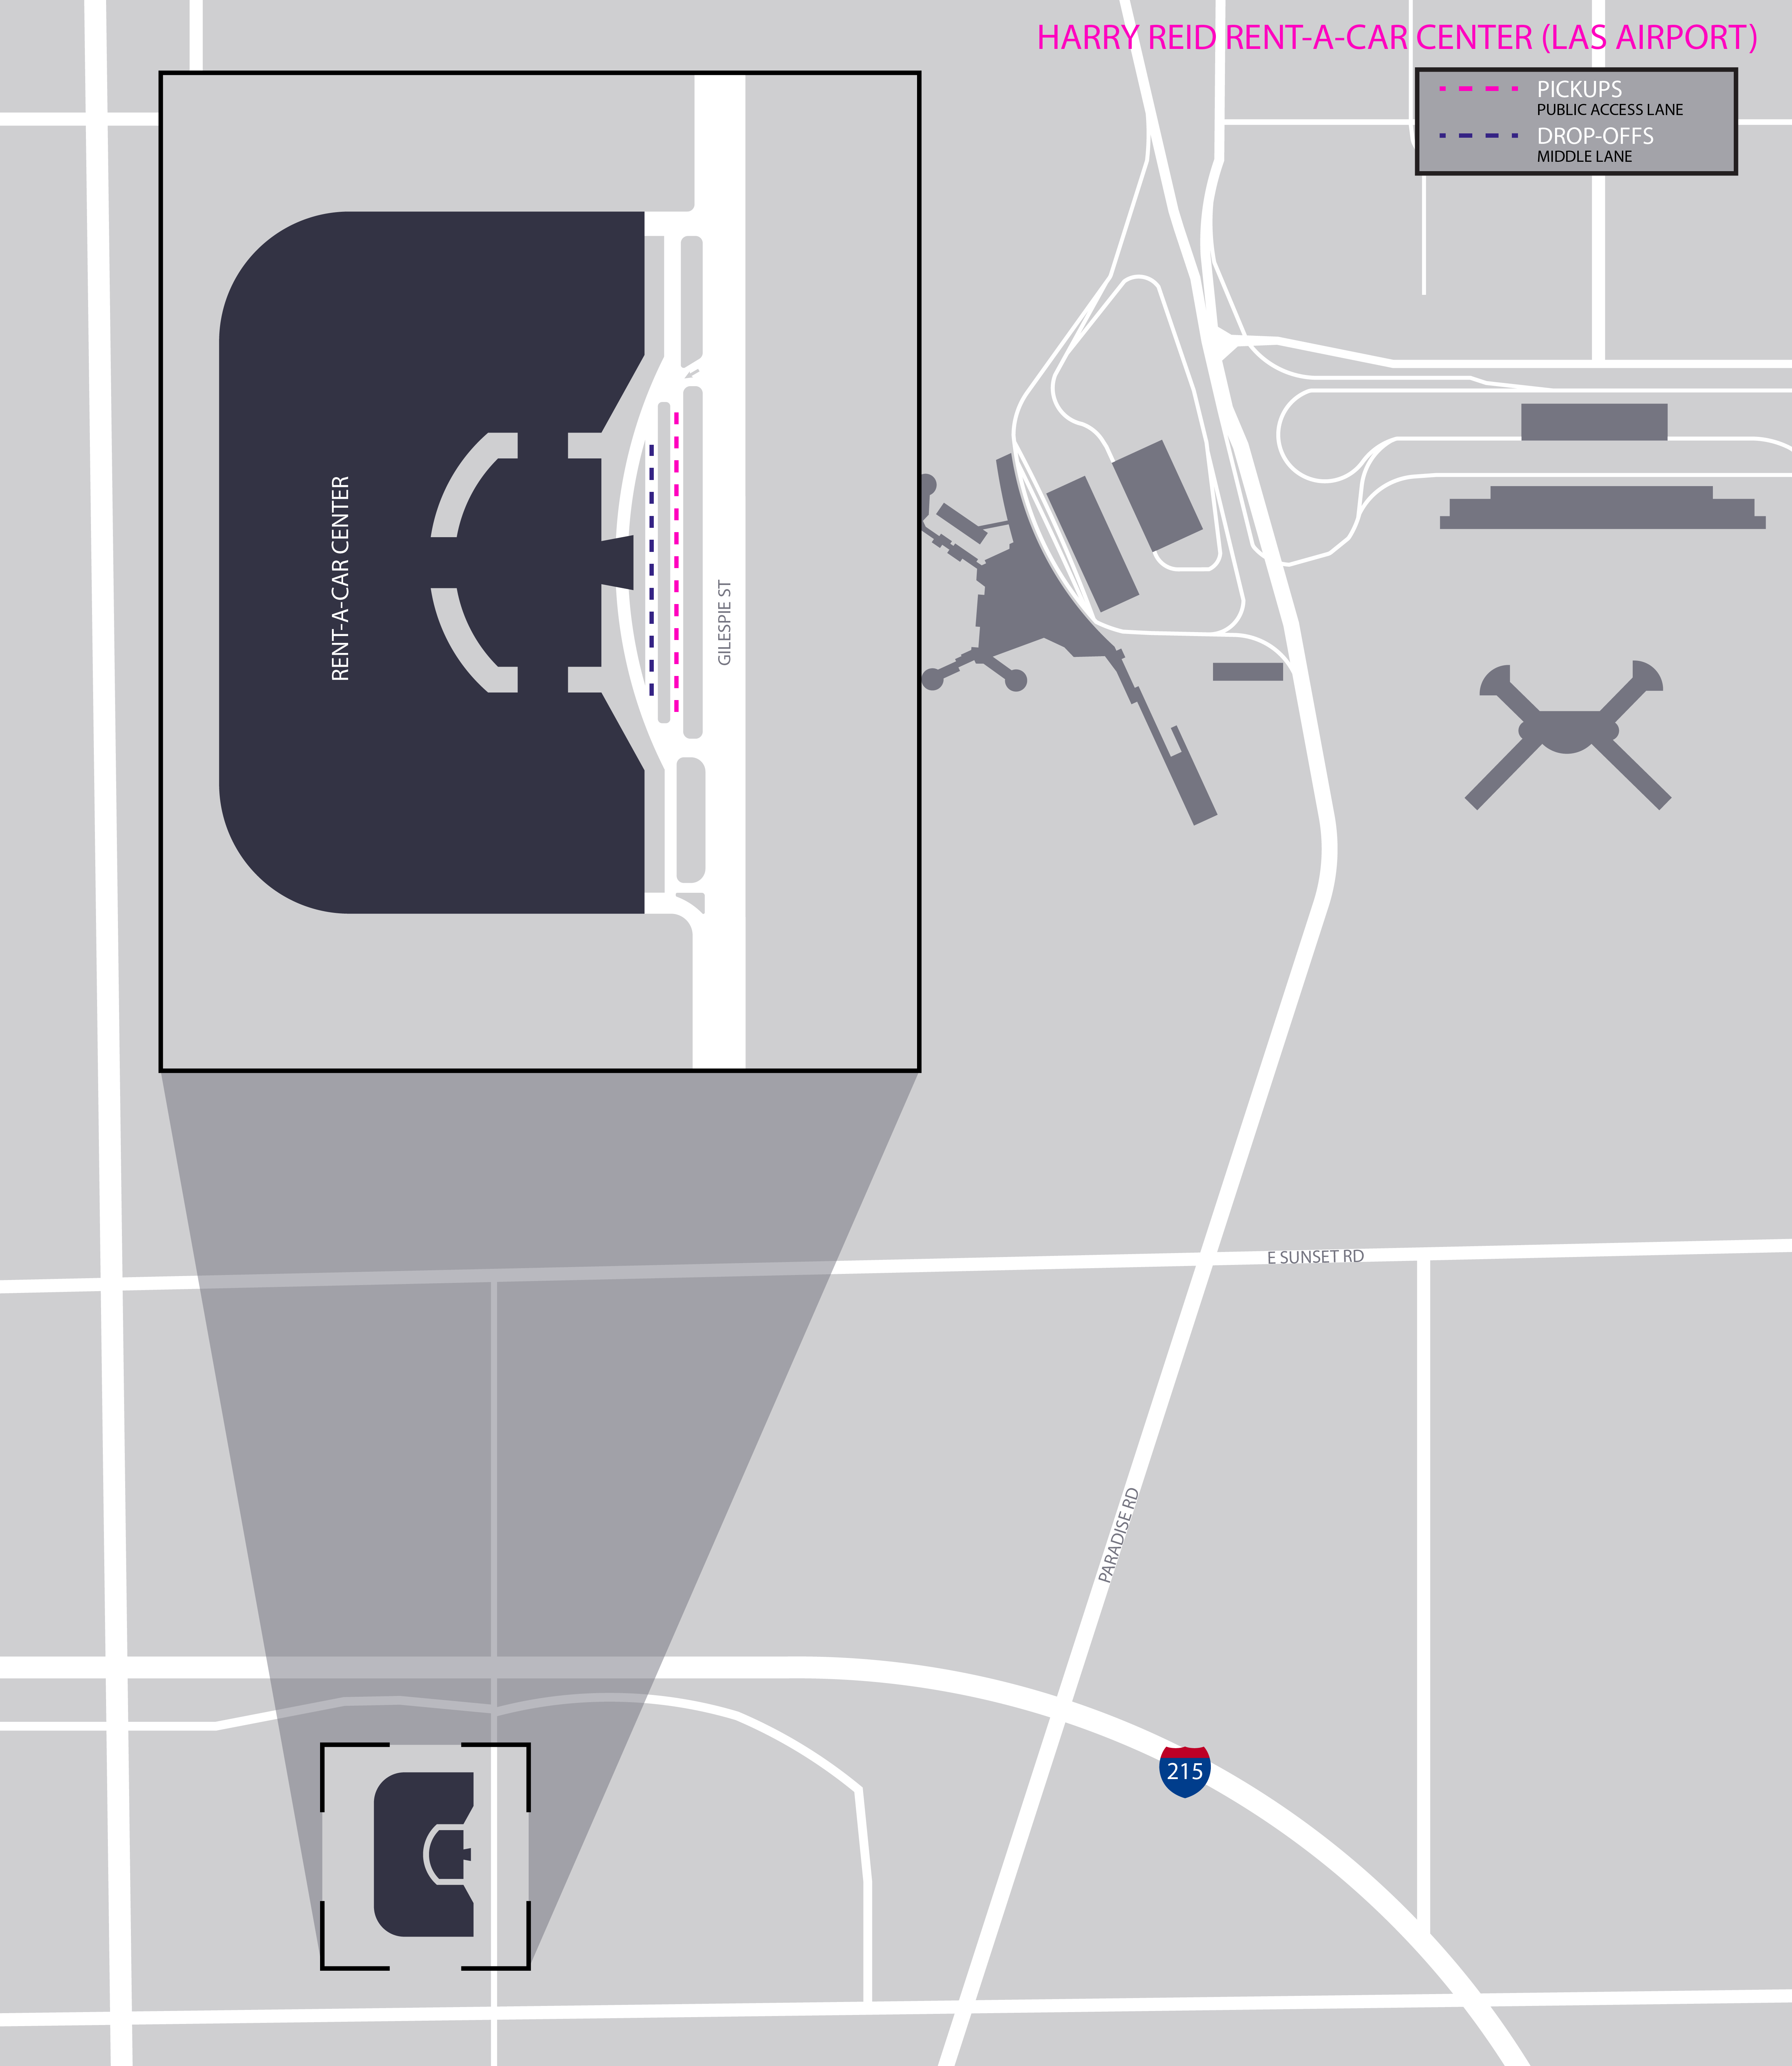 Mapa do centro Rent-a-Car no Aeroporto Internacional Harry Reid (LAS).